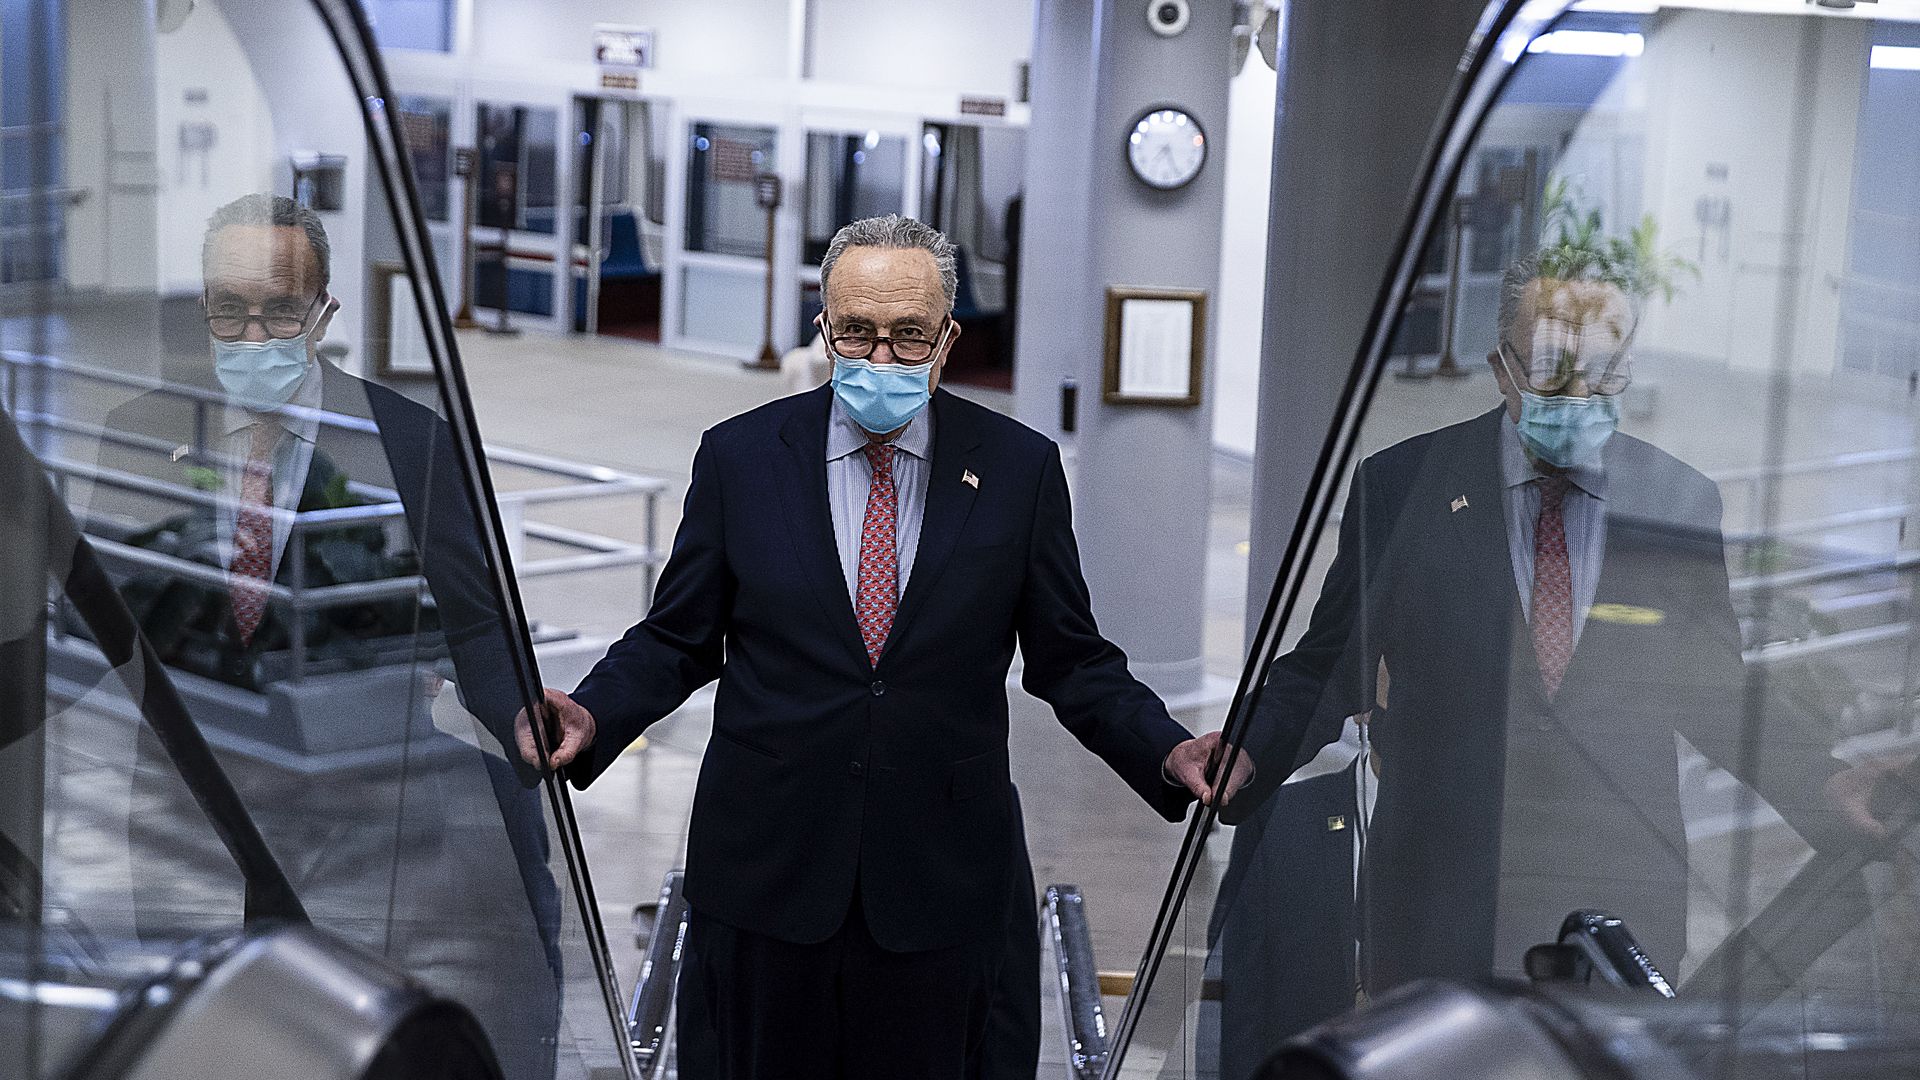 Sen. Chuck Schumer wearing a medical mask and riding up an escalator in the Senate building basement.